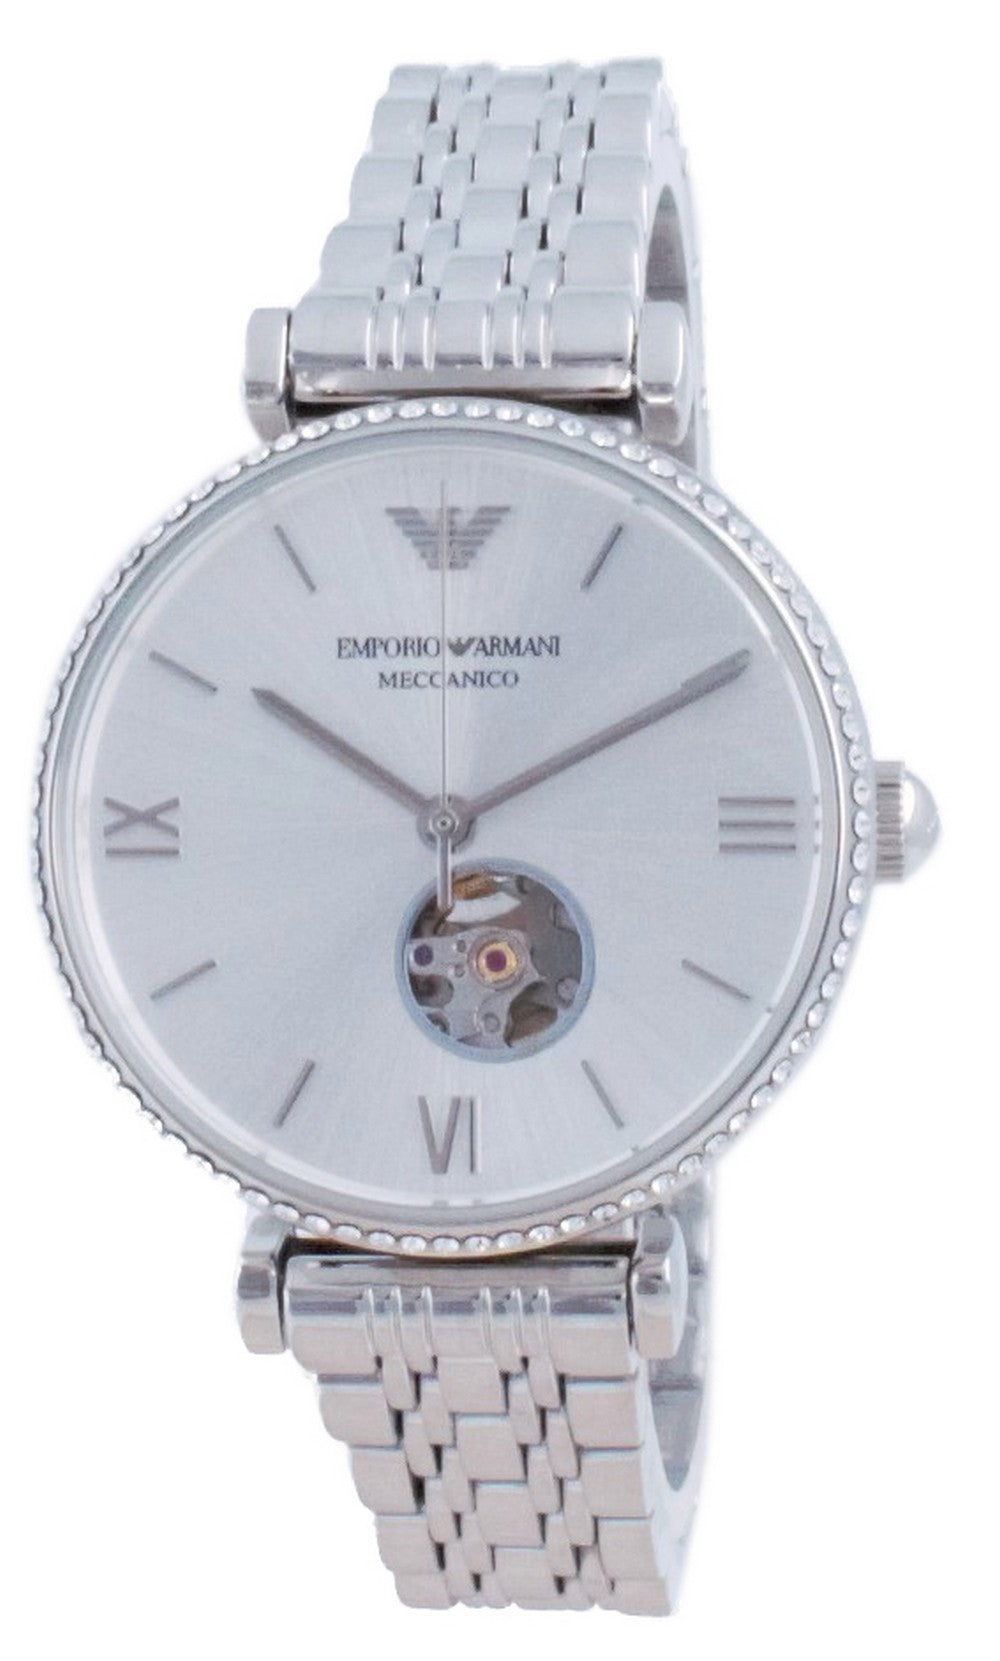 Emporio Armani Gianni T-bar Open Heart Diamond Accents Automatic Ar60022 Women's Watch